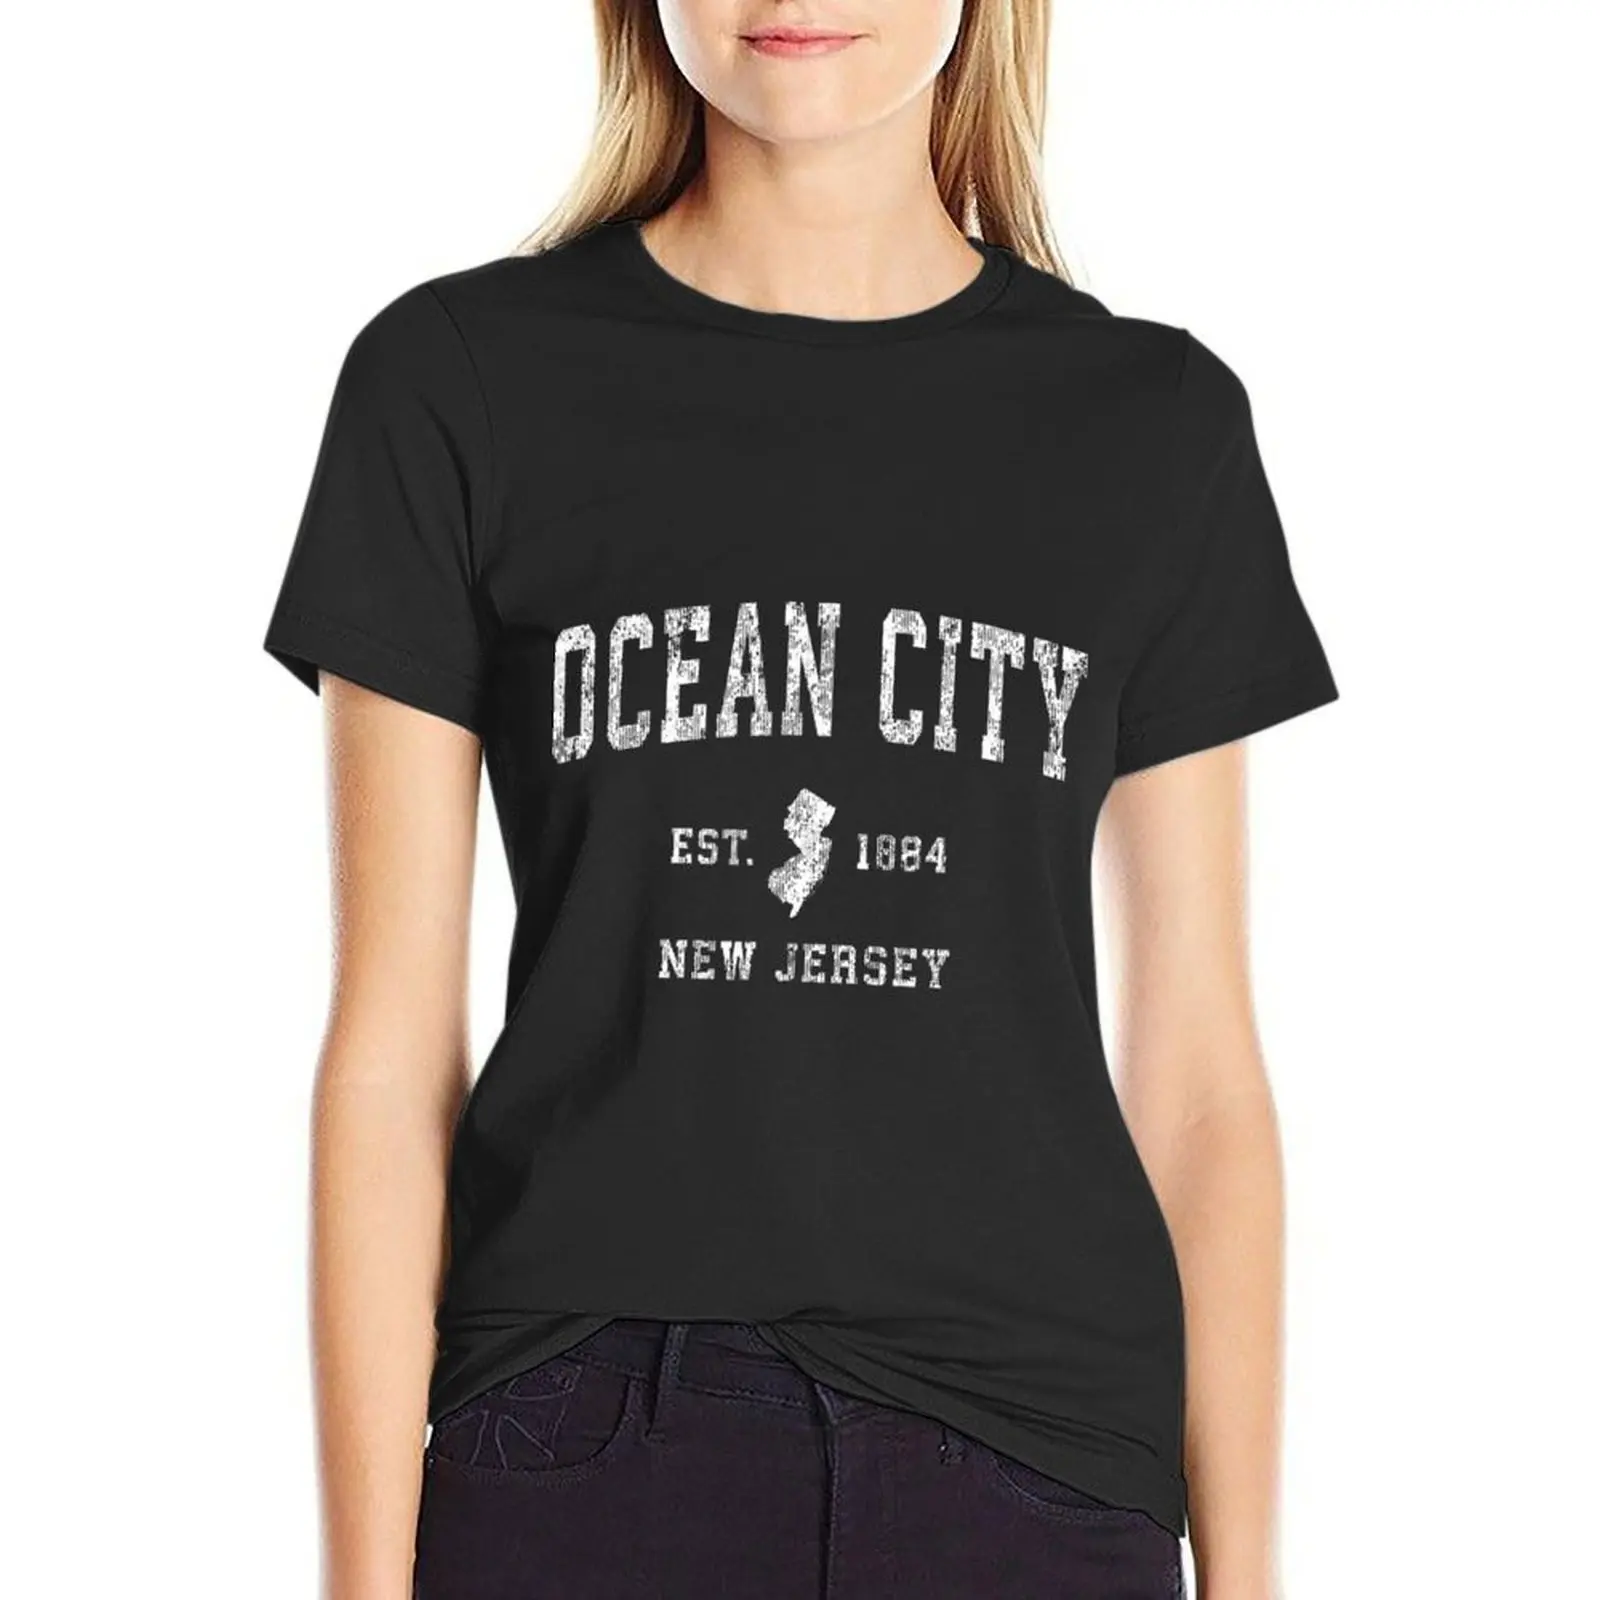 

Ocean City New Jersey NJ Vintage Athletic Sports Design \t\t T-Shirt korean fashion plain oversized workout shirts for Women